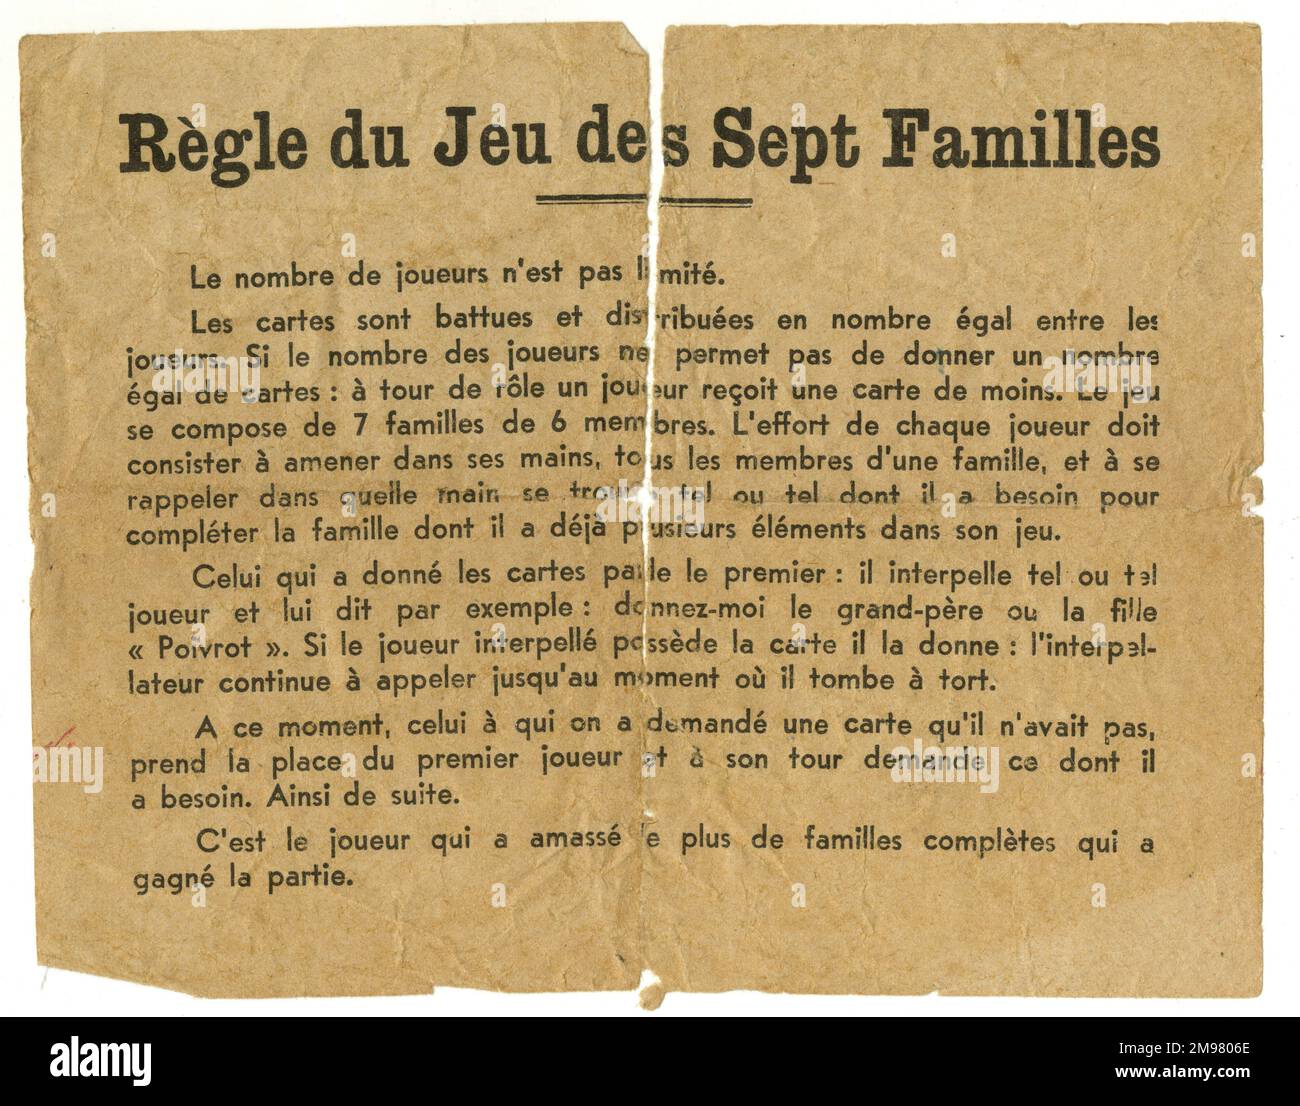 French Happy Families (Le Jeu des Sept Familles) - Regeln und Anweisungen. Stockfoto